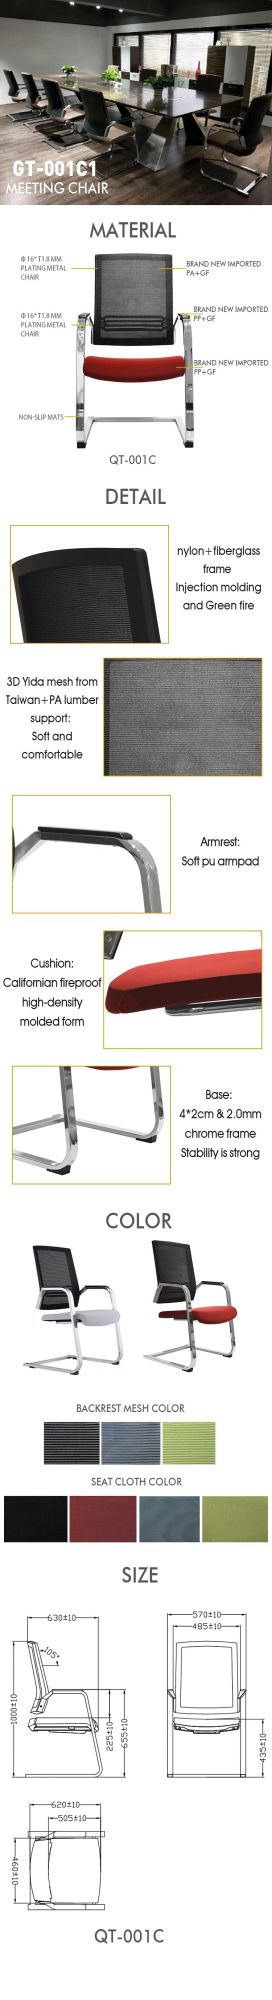 Californian Fireproof High-Density Molded Form Chrome Frame Office Chair